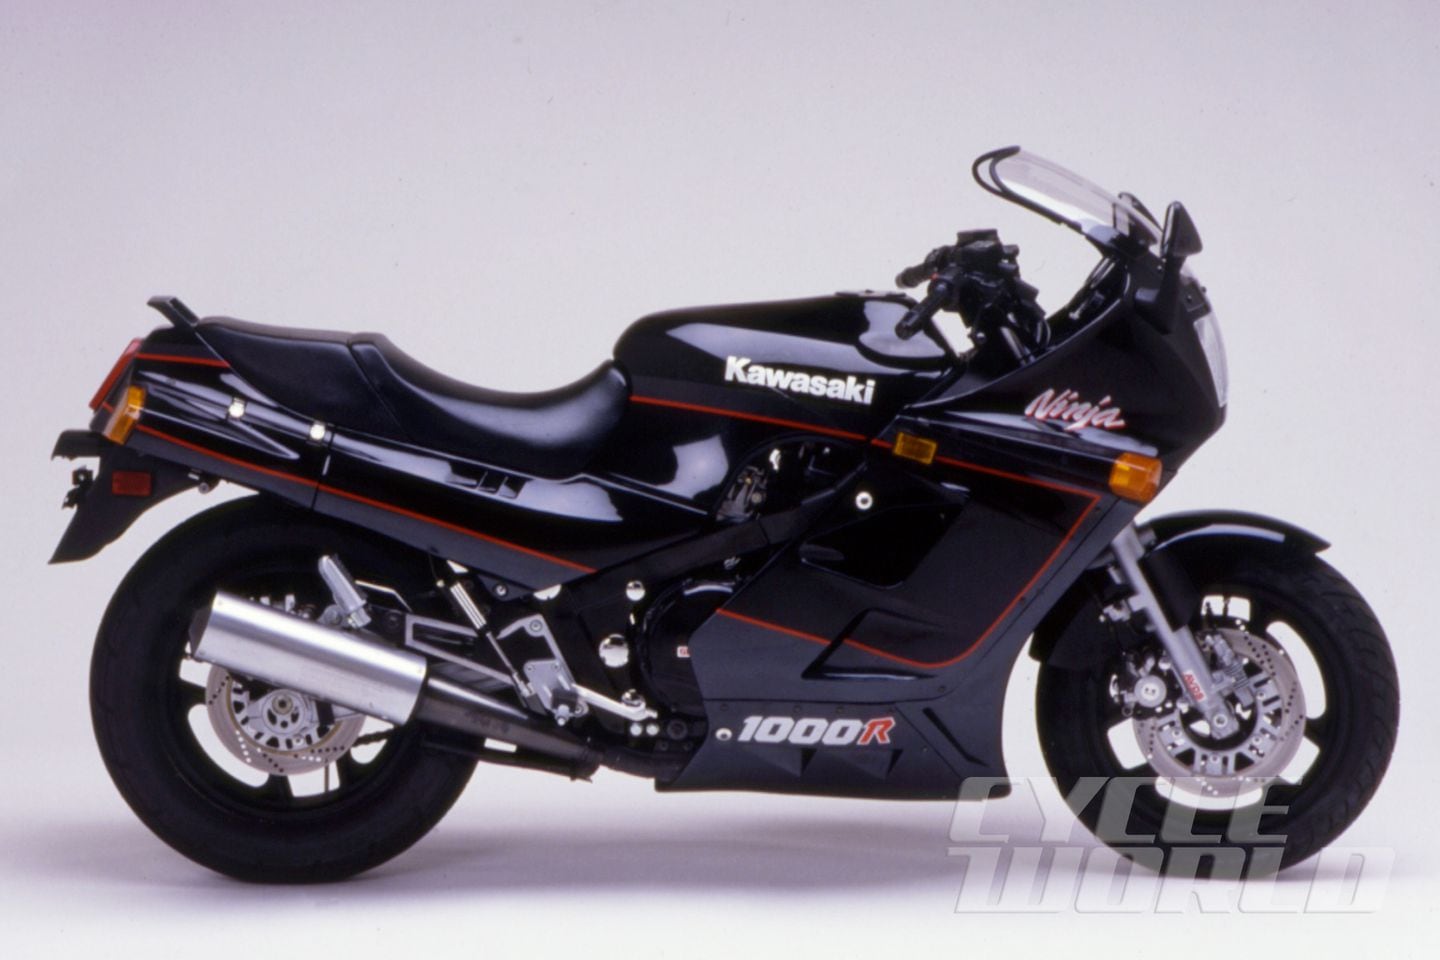 Dovenskab tab Nøjagtighed Kawasaki Ninja Motorcycle History: 1984 GPz900 to 1990 ZX-11 | Cycle World